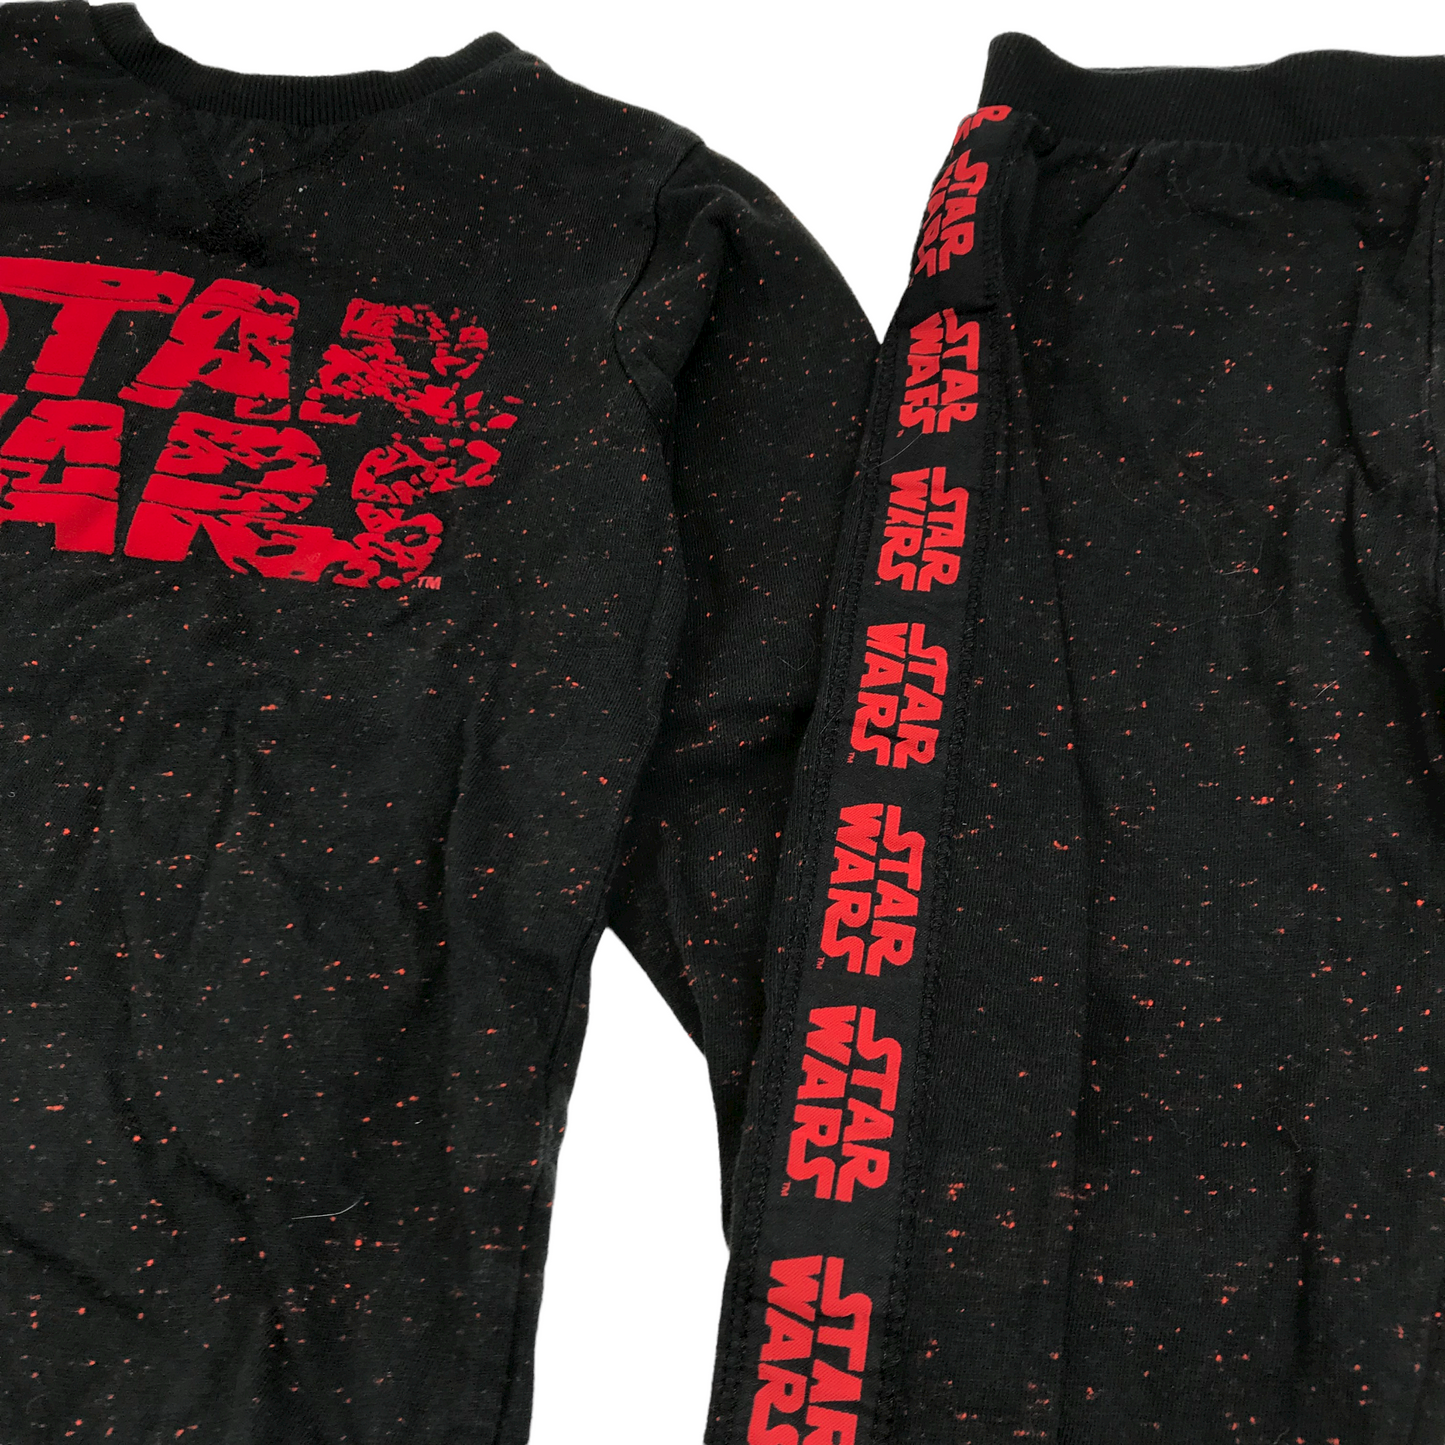 George Black Star Wars Pyjama Set Age 5